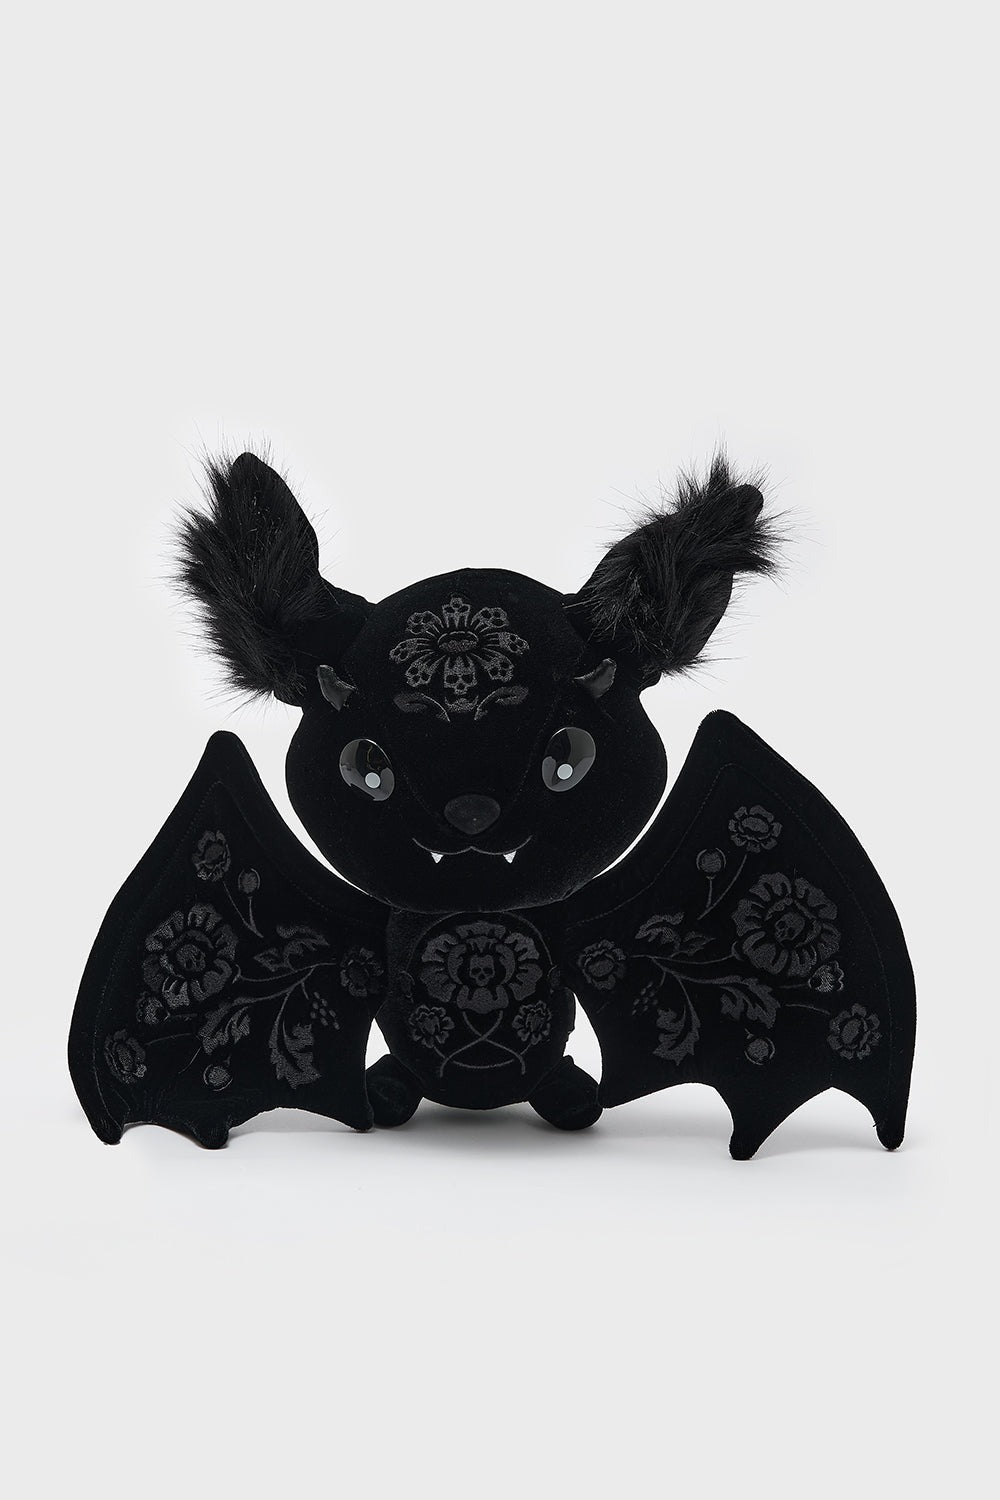 gothic stuffed animal